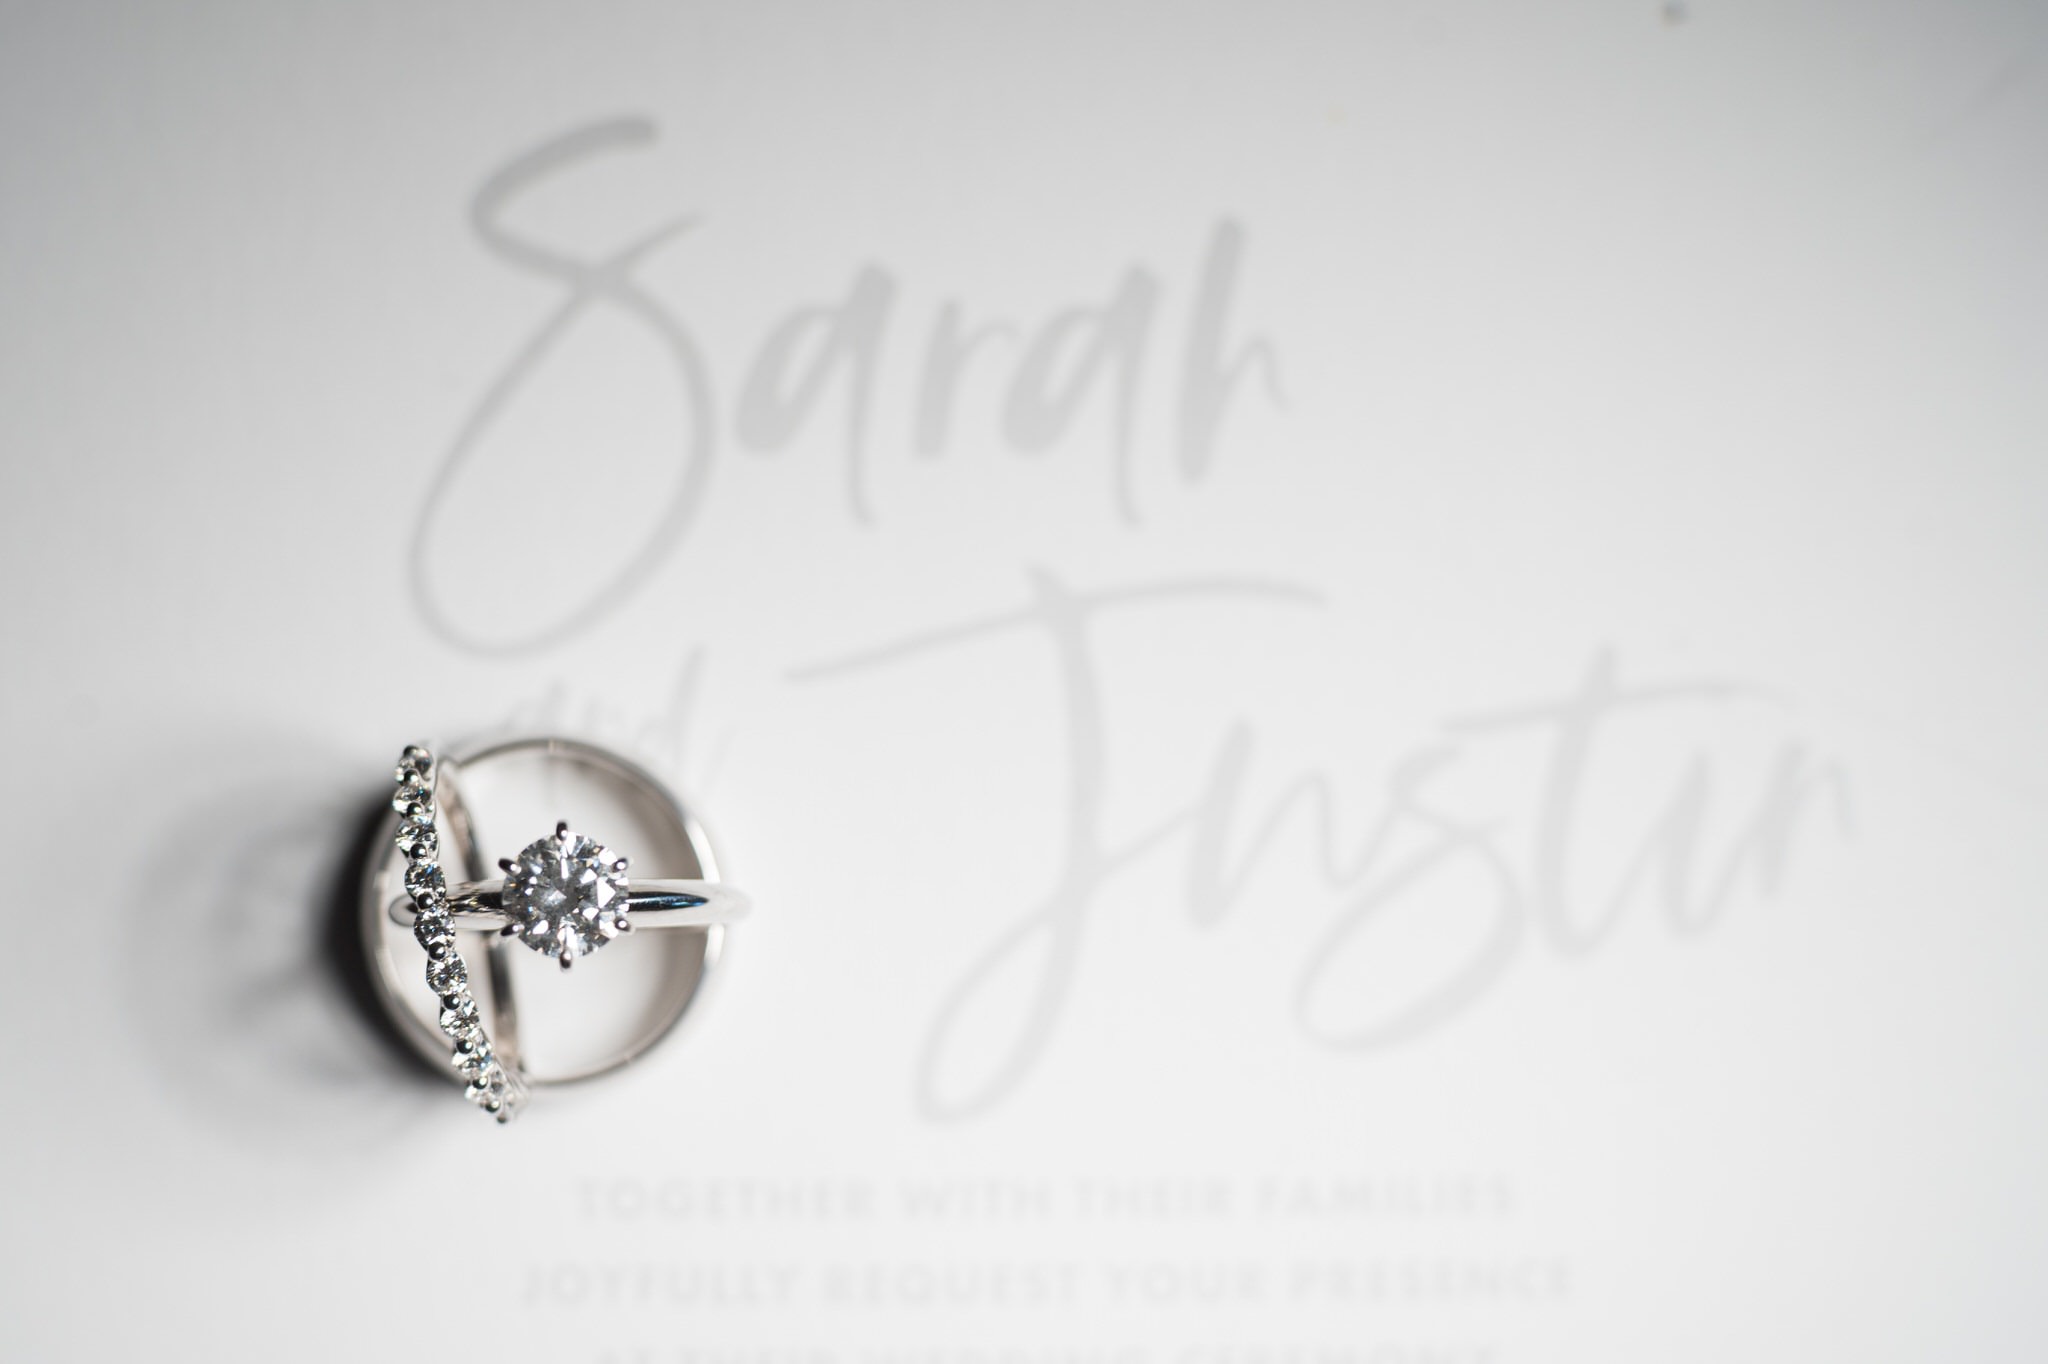 wedding rings balancing on an invite reading Sarah and Justin